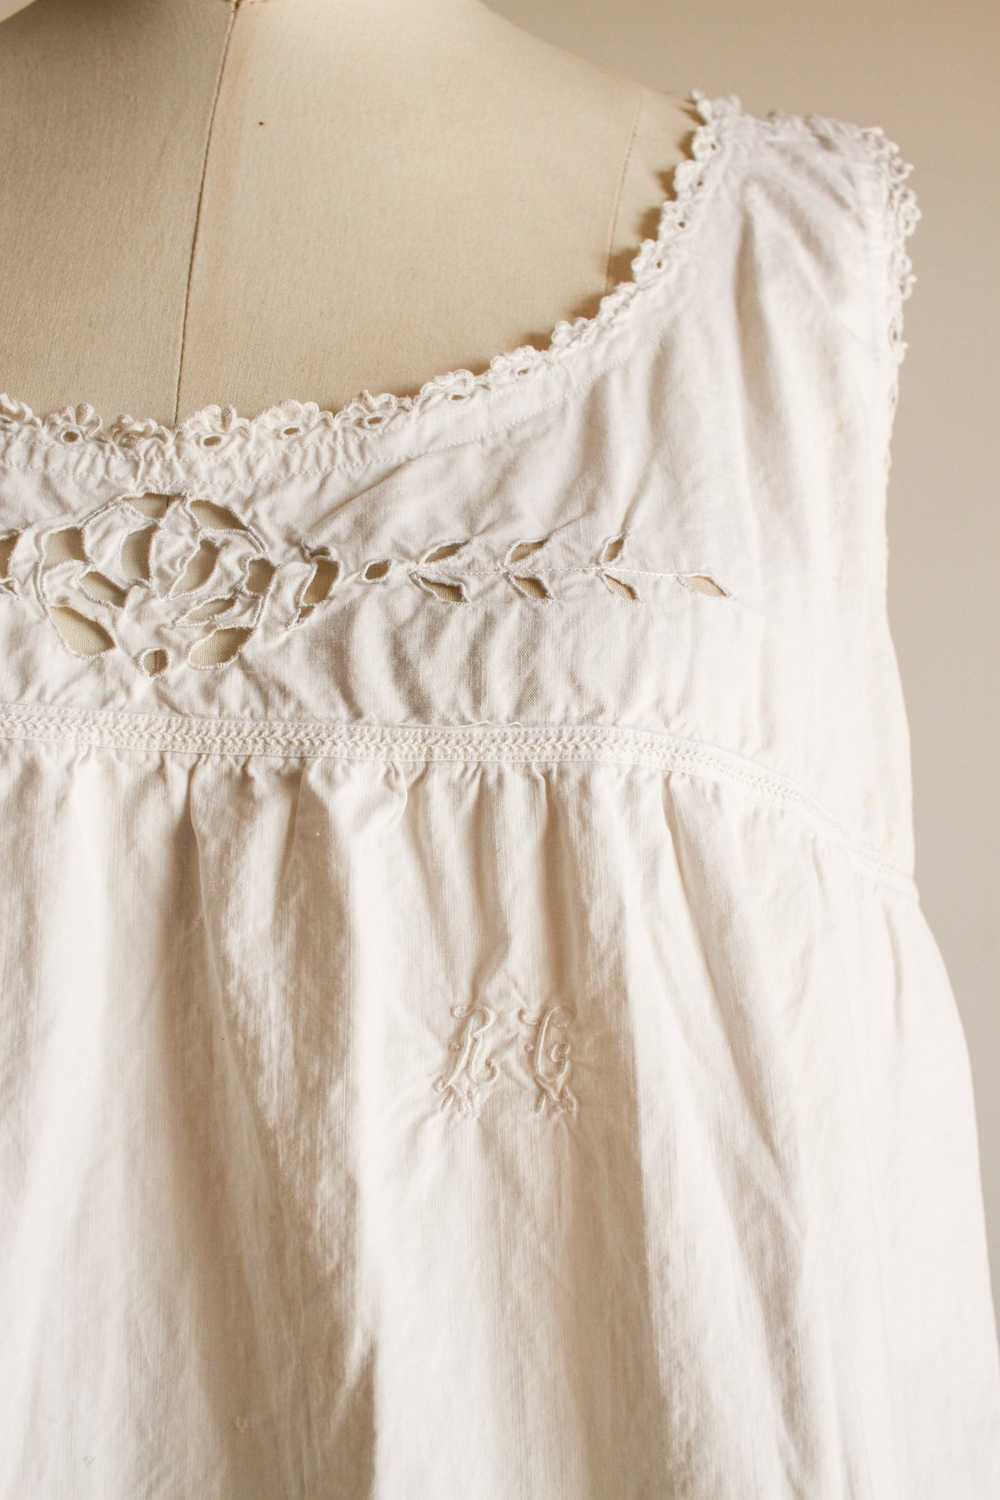 Victorian White Cotton Rosette Night Dress - image 4